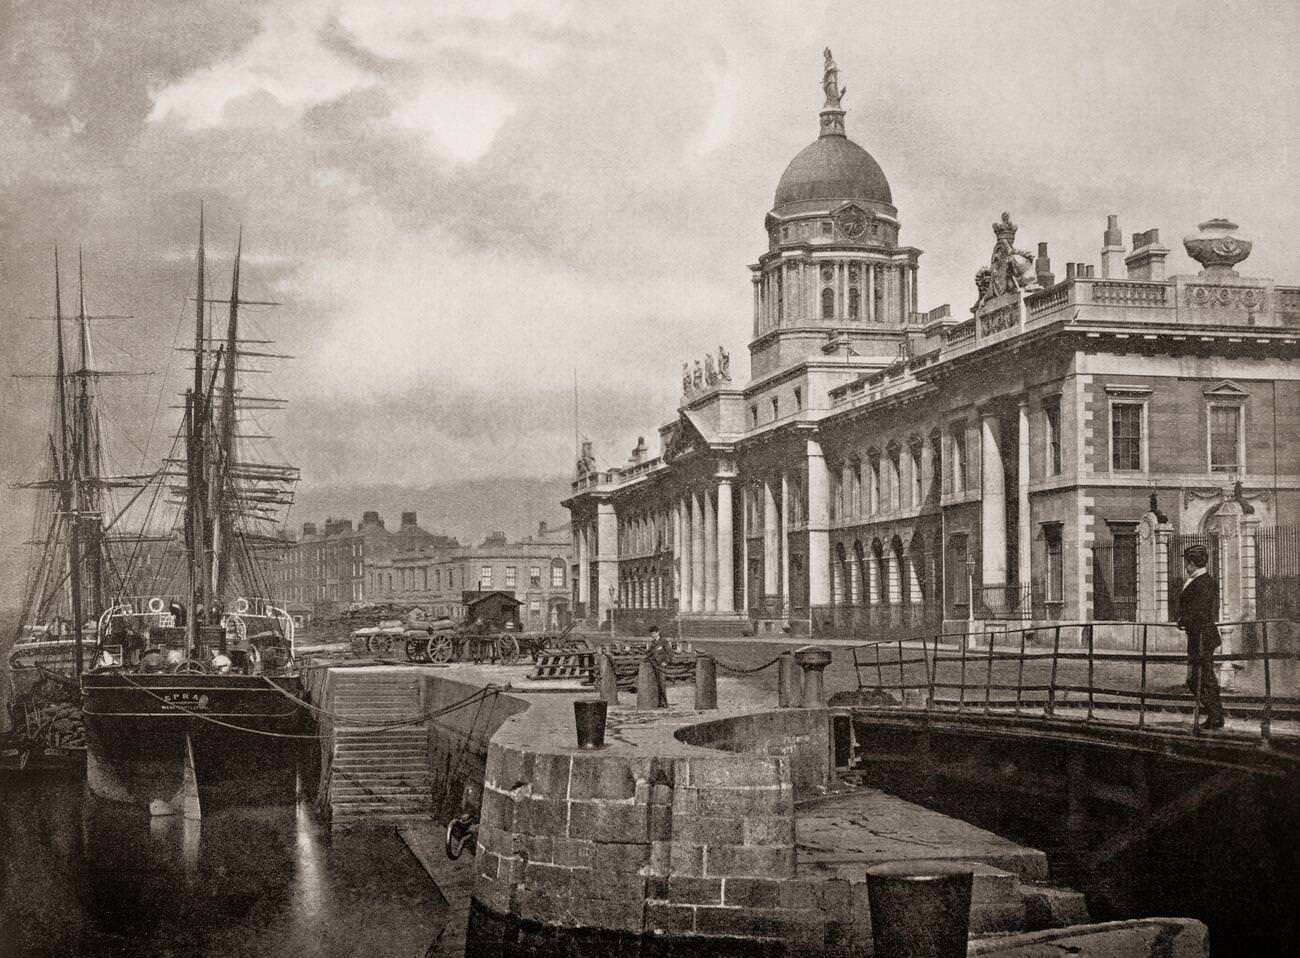 The neoclassical 18th century Custom House alongside the River Liffey in Dublin, Ireland.